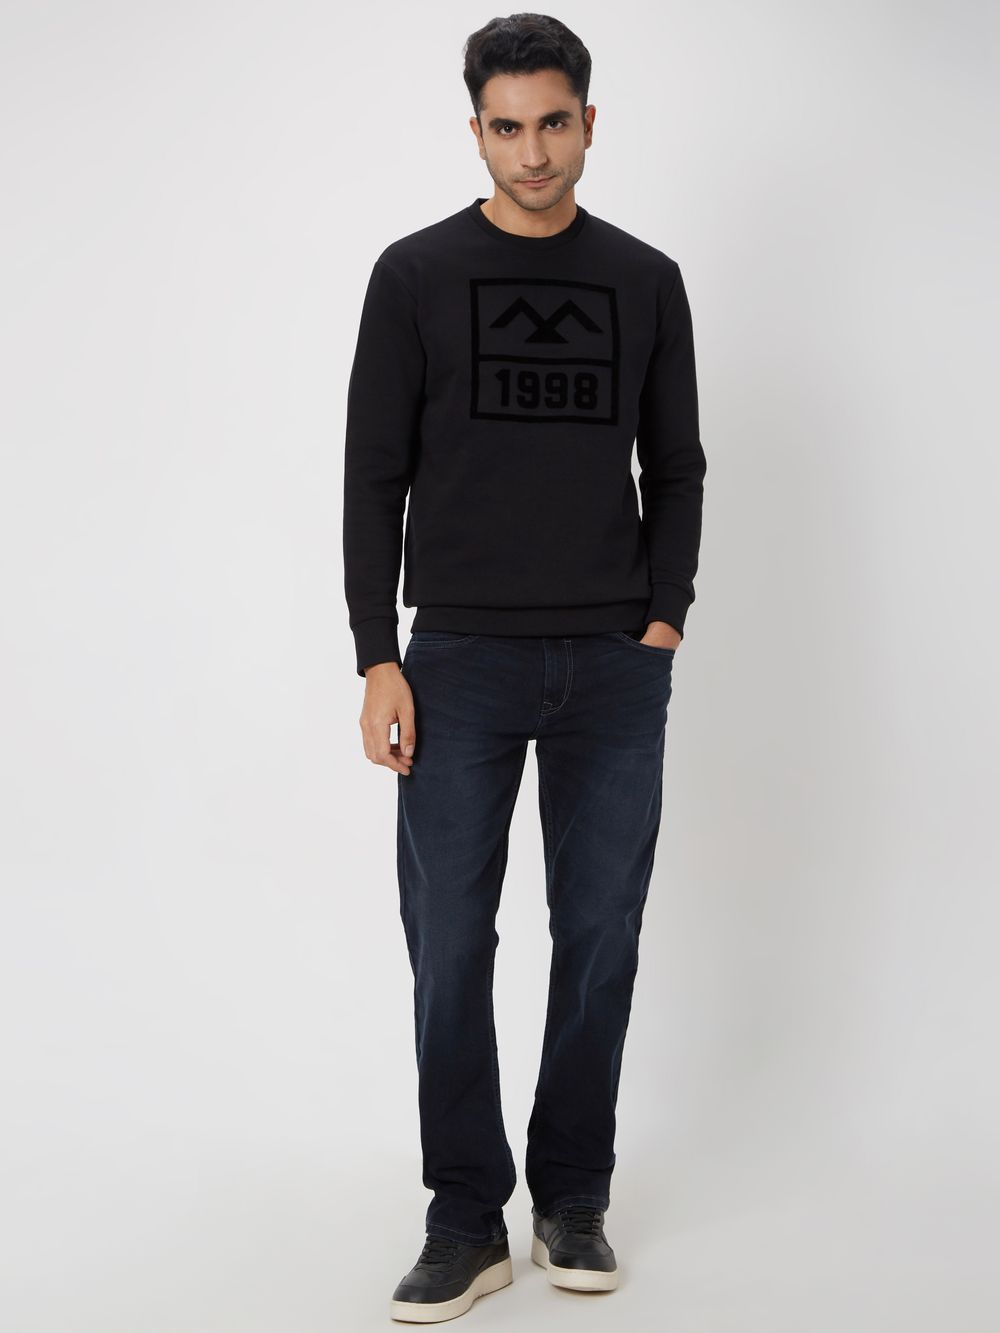 Black Flock Print Knitted Fleece Sweatshirt